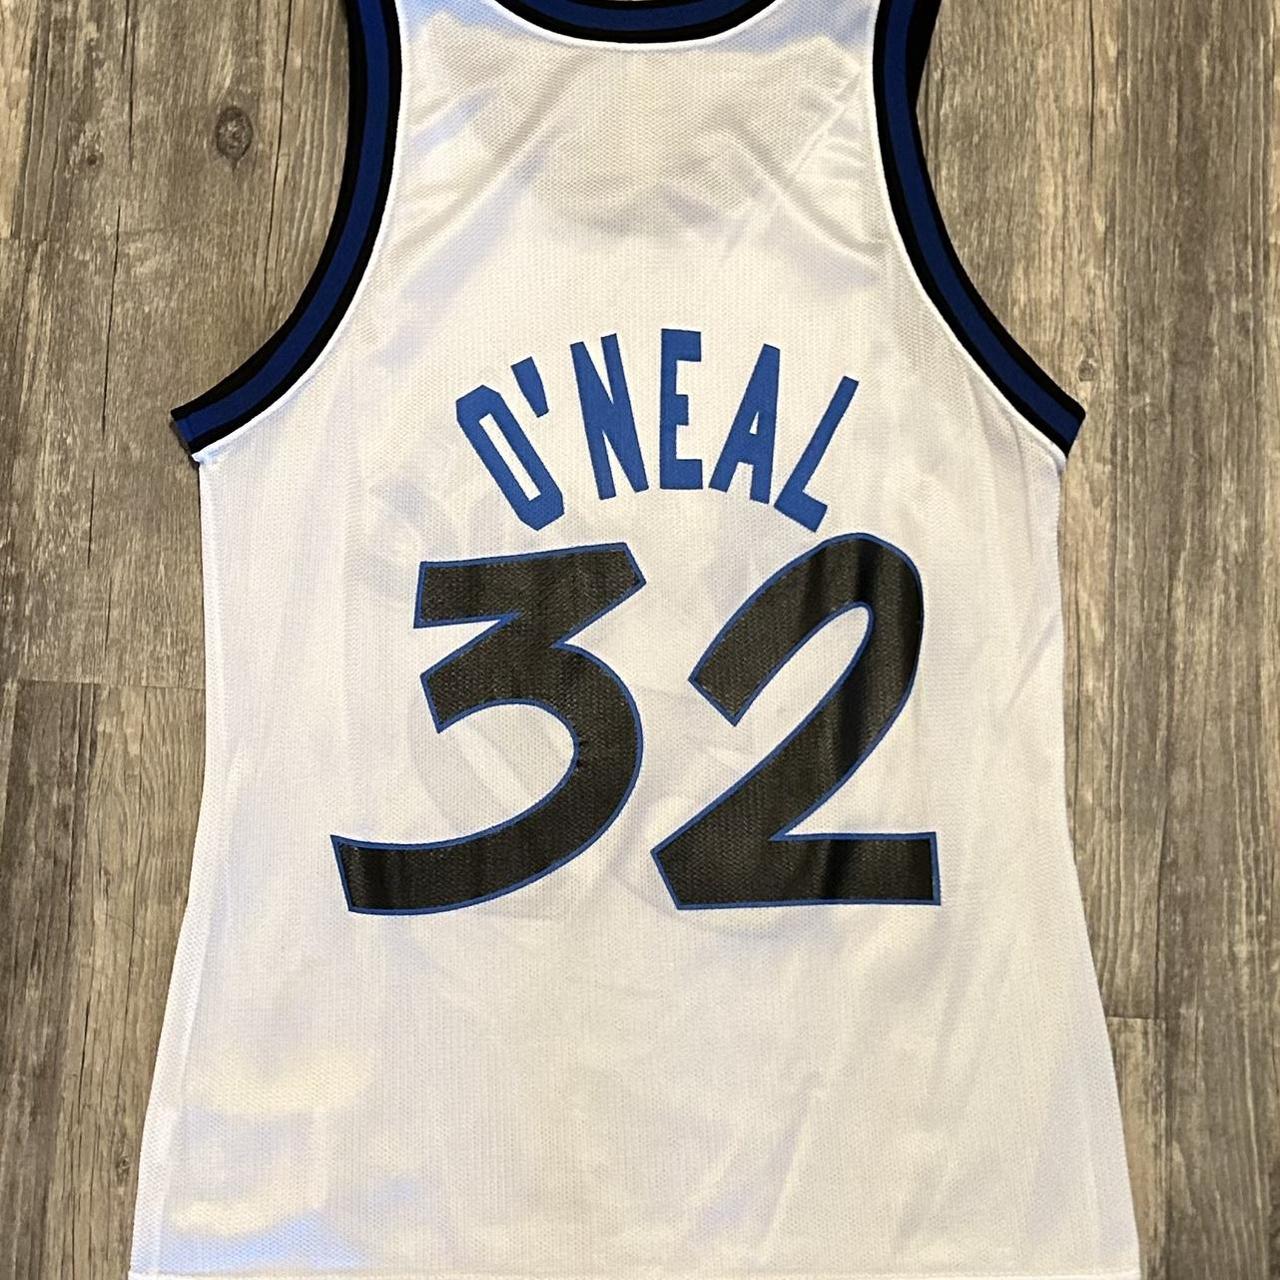 Vintage Orlando Magic Shaquille O'Neal #32 Champion Jersey